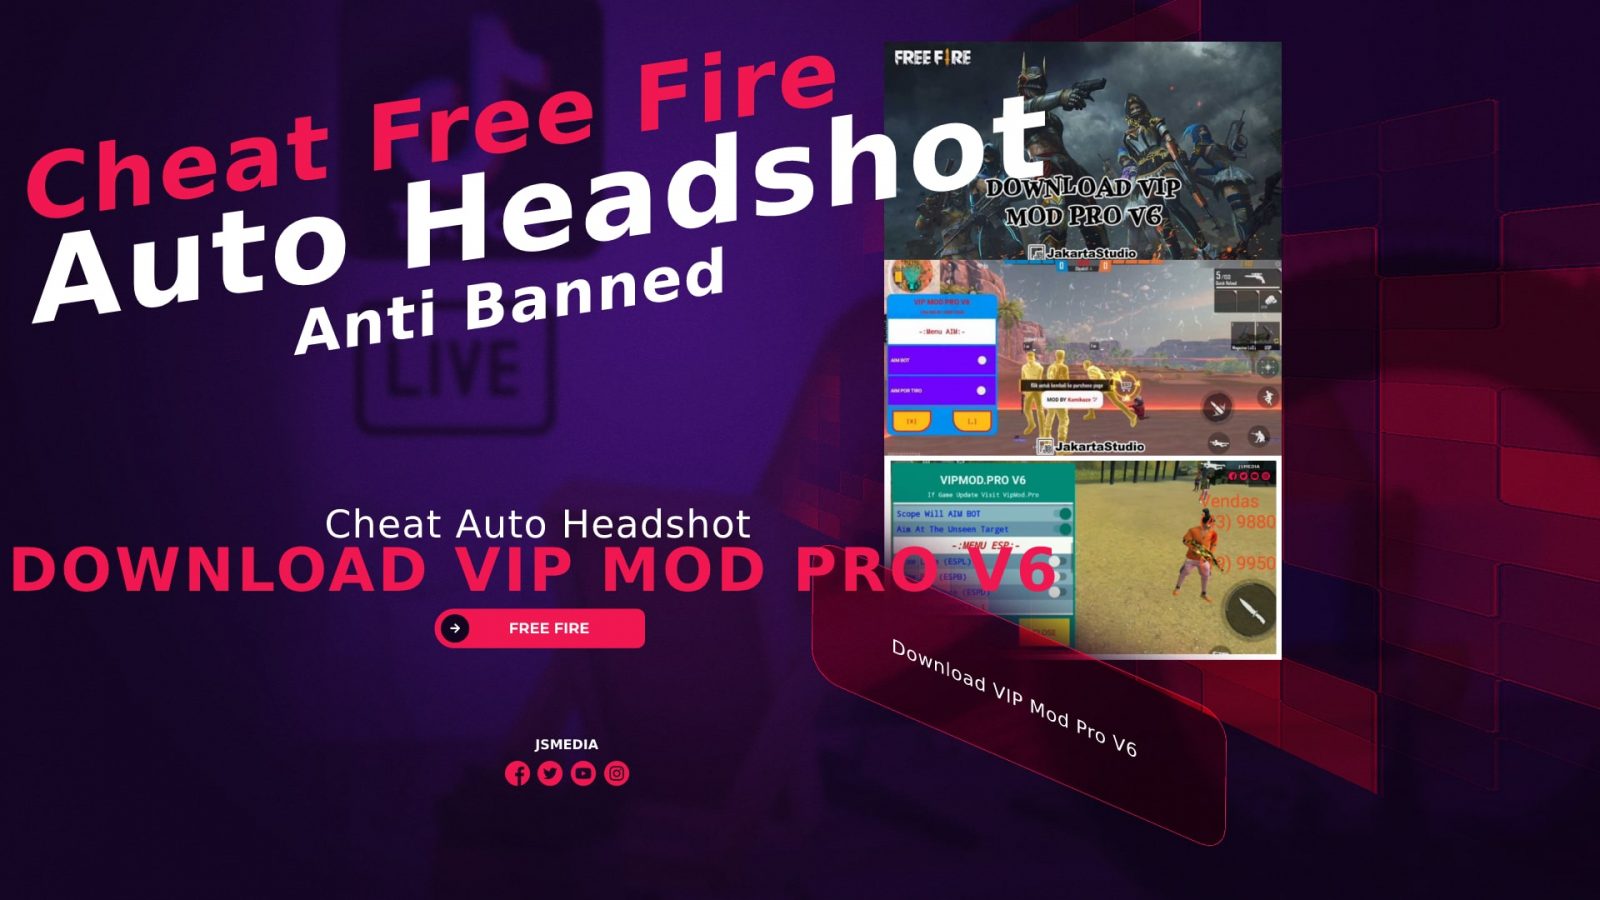 Download VIP Mod Pro V6 Cheat Auto Headshot FF Anti Banned